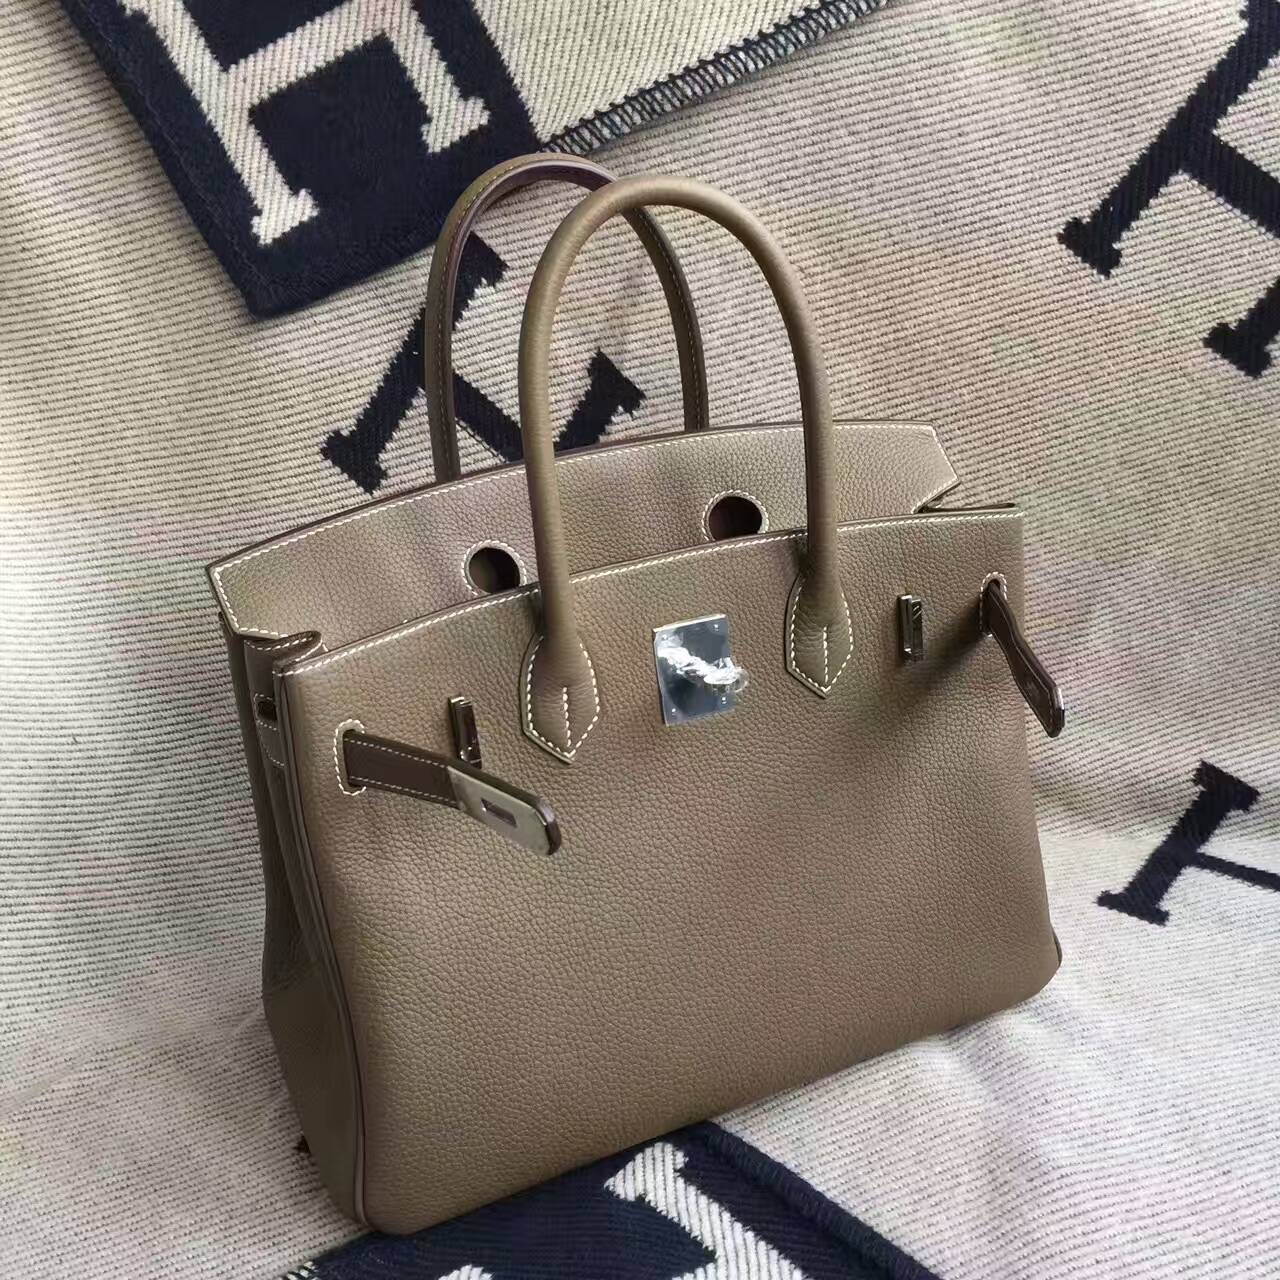 High Quality Hermes C18 Etoupe Grey Togo Calfskin Leather Birkin Bag 30cm